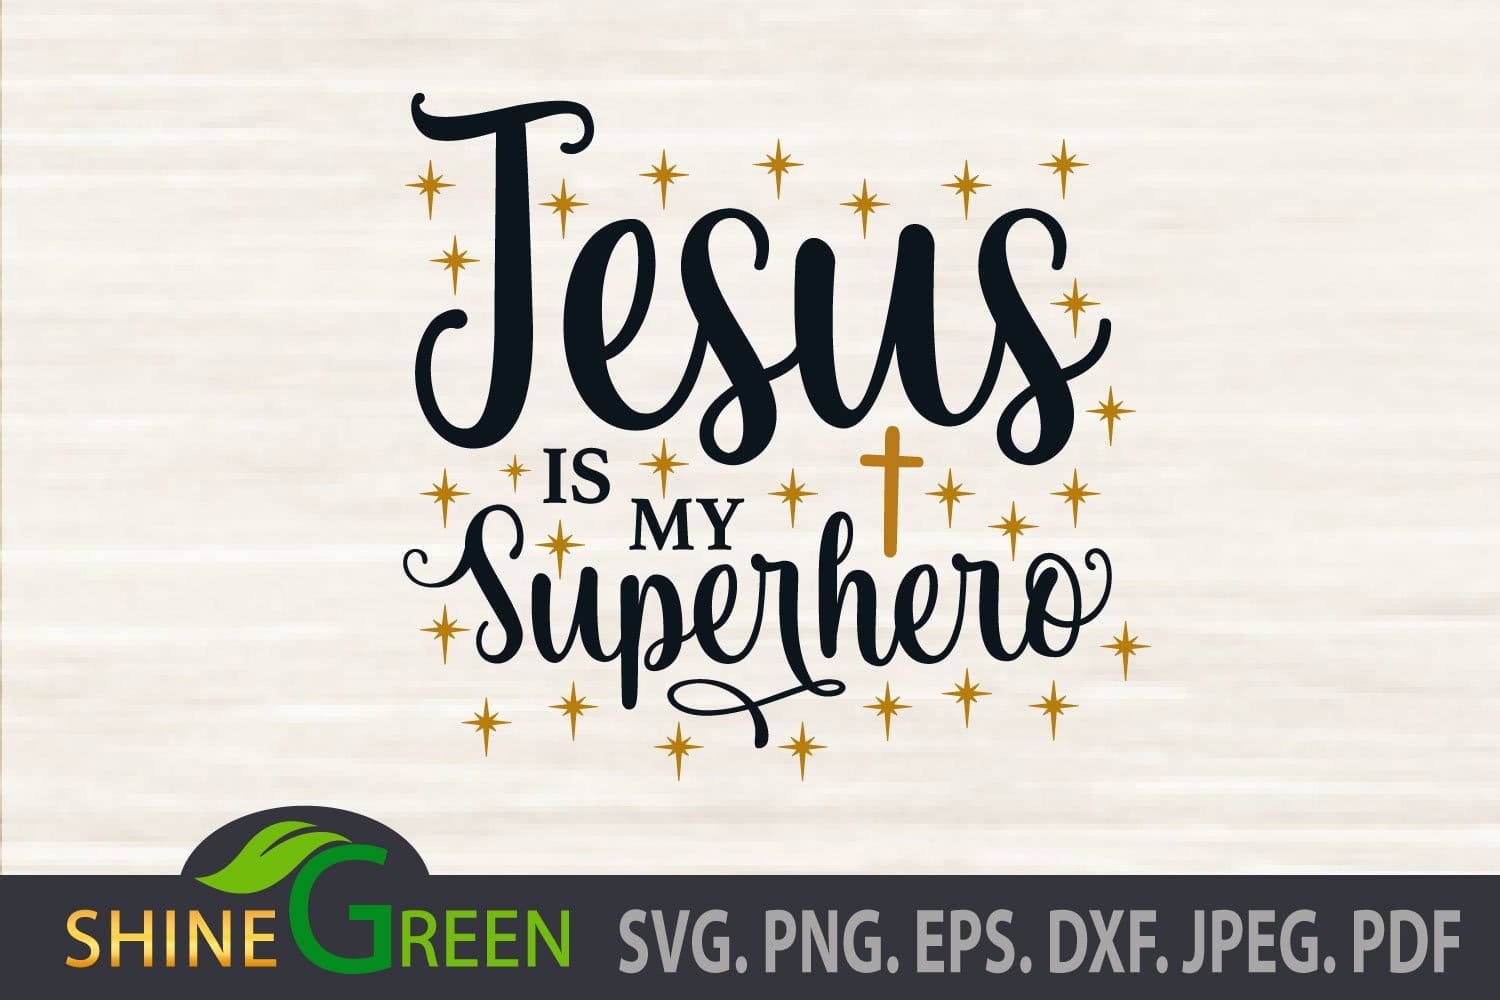 The inscription on a beige background - "Jesus is my superhero".